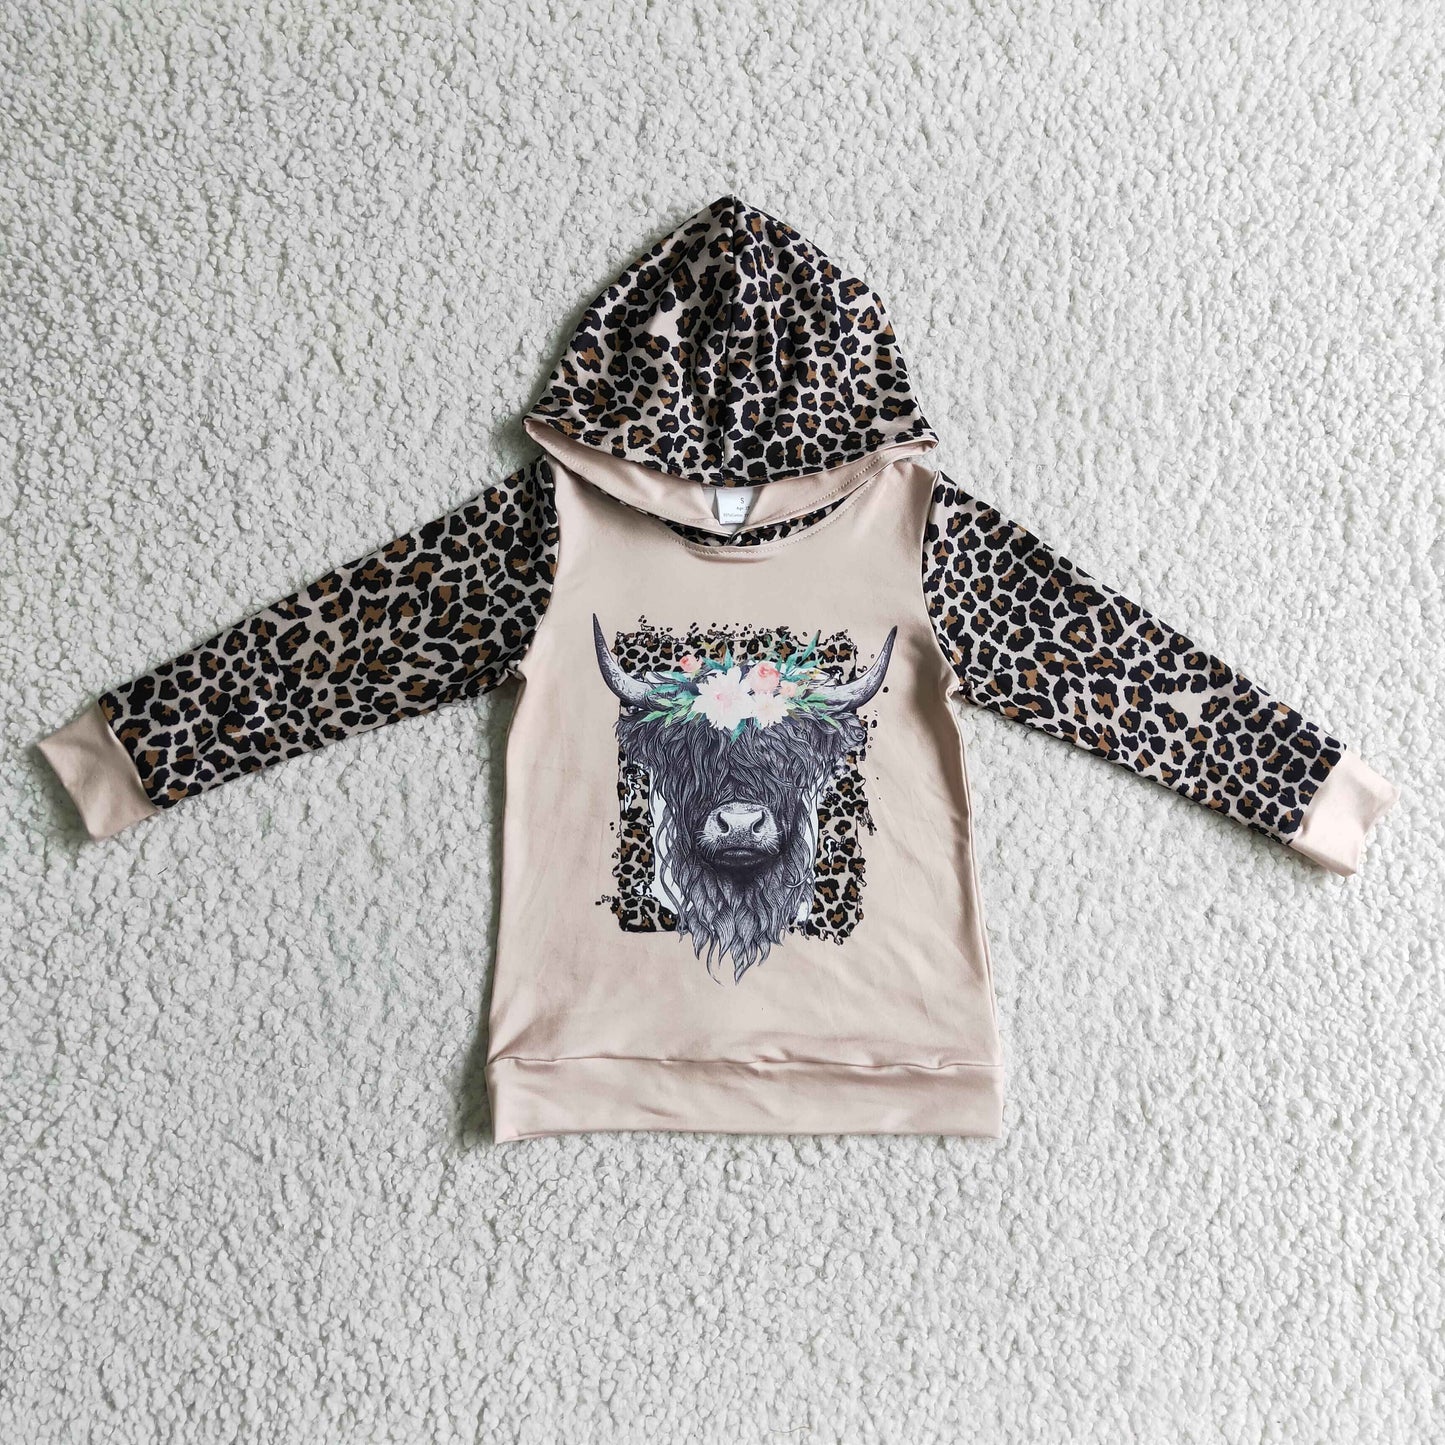 Highland cow leopard long sleeves hoodie girls western shirt